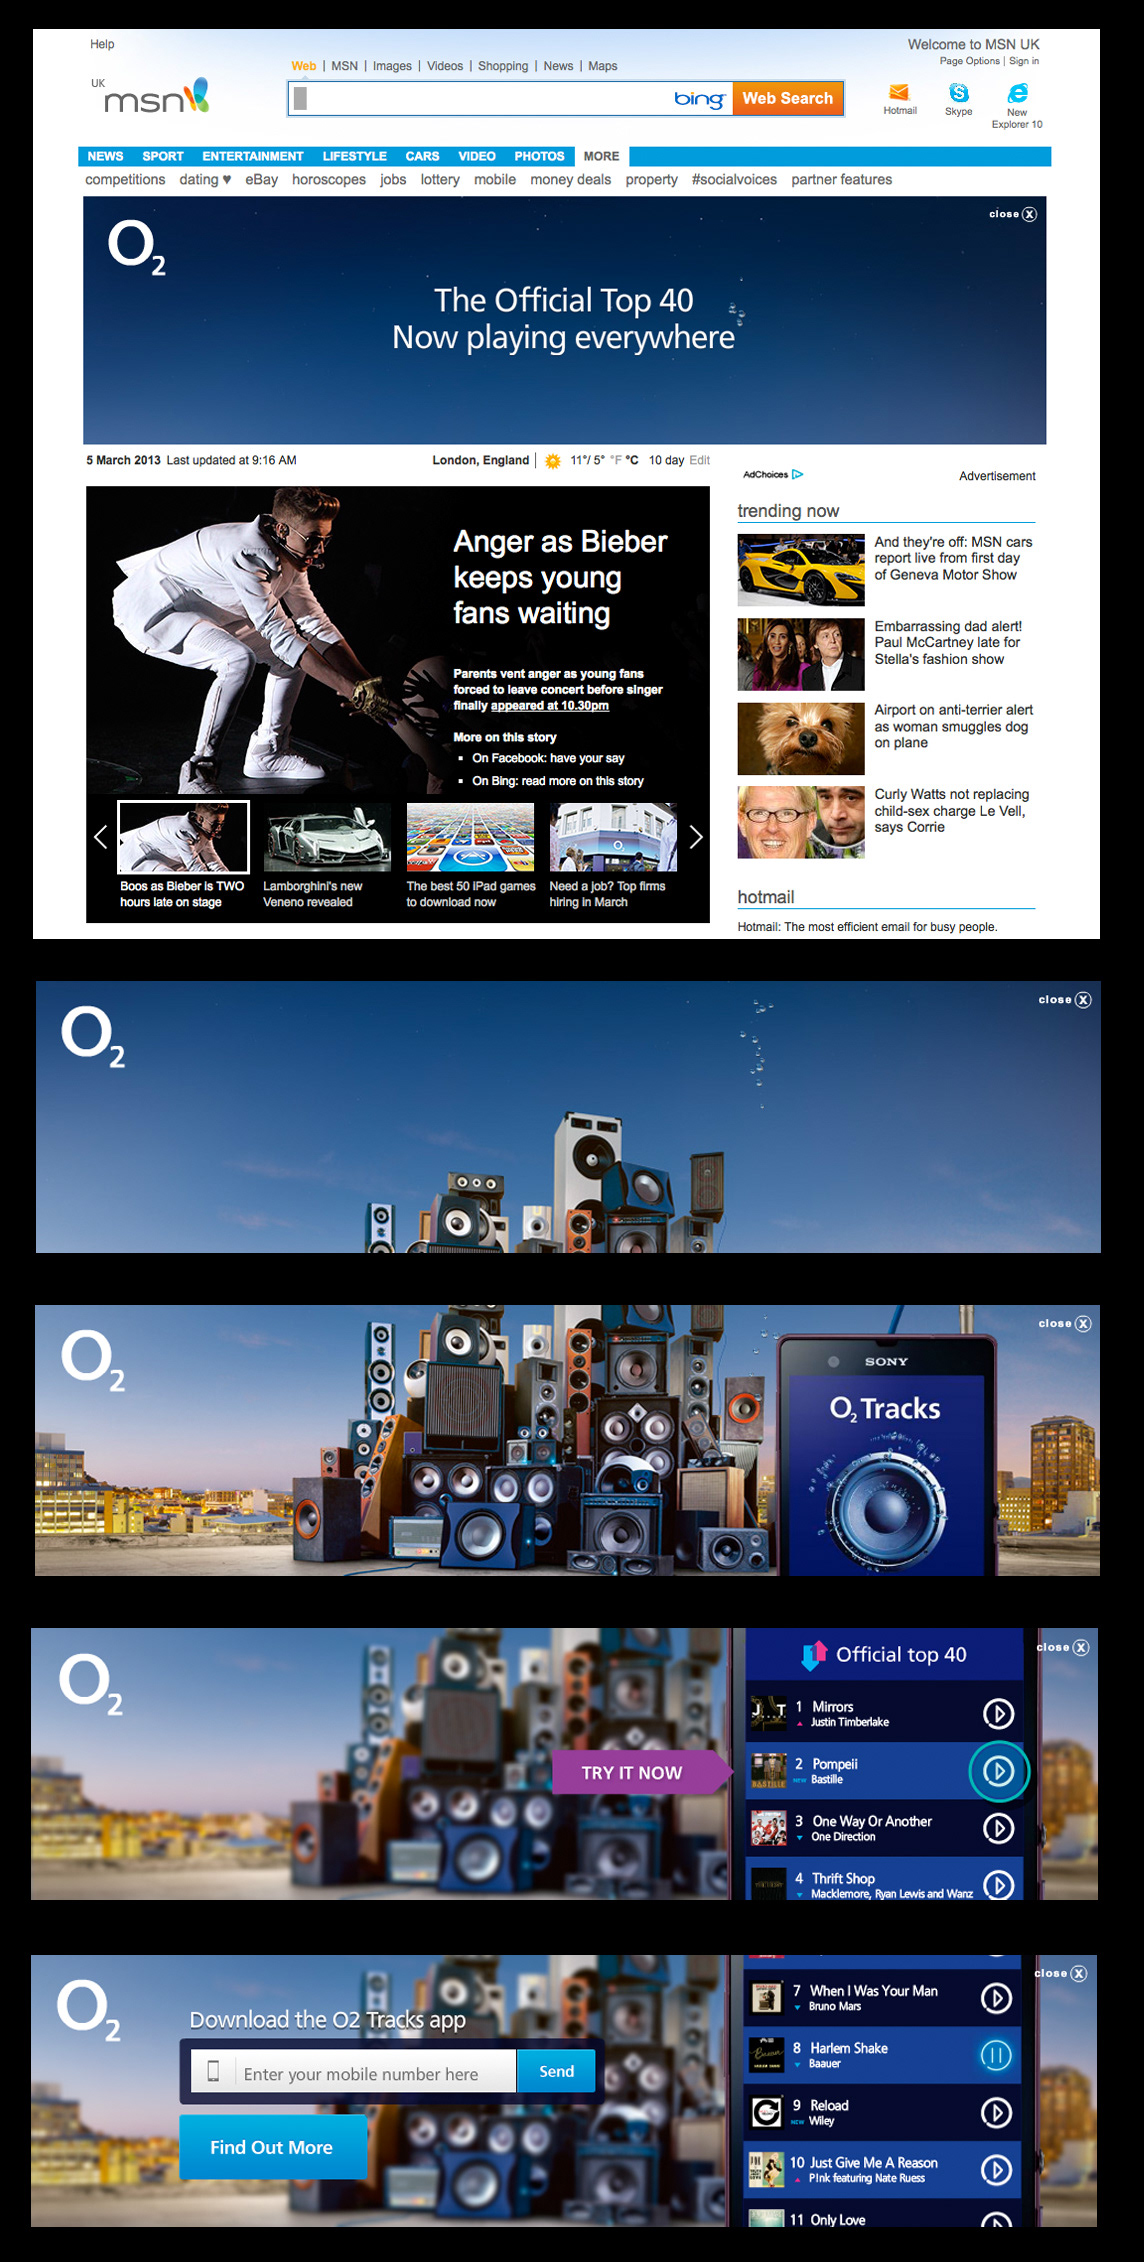 Advertising  Emile Sande  tv  advert  underground  london  tracks  Music  Artist  app  o2 tracks